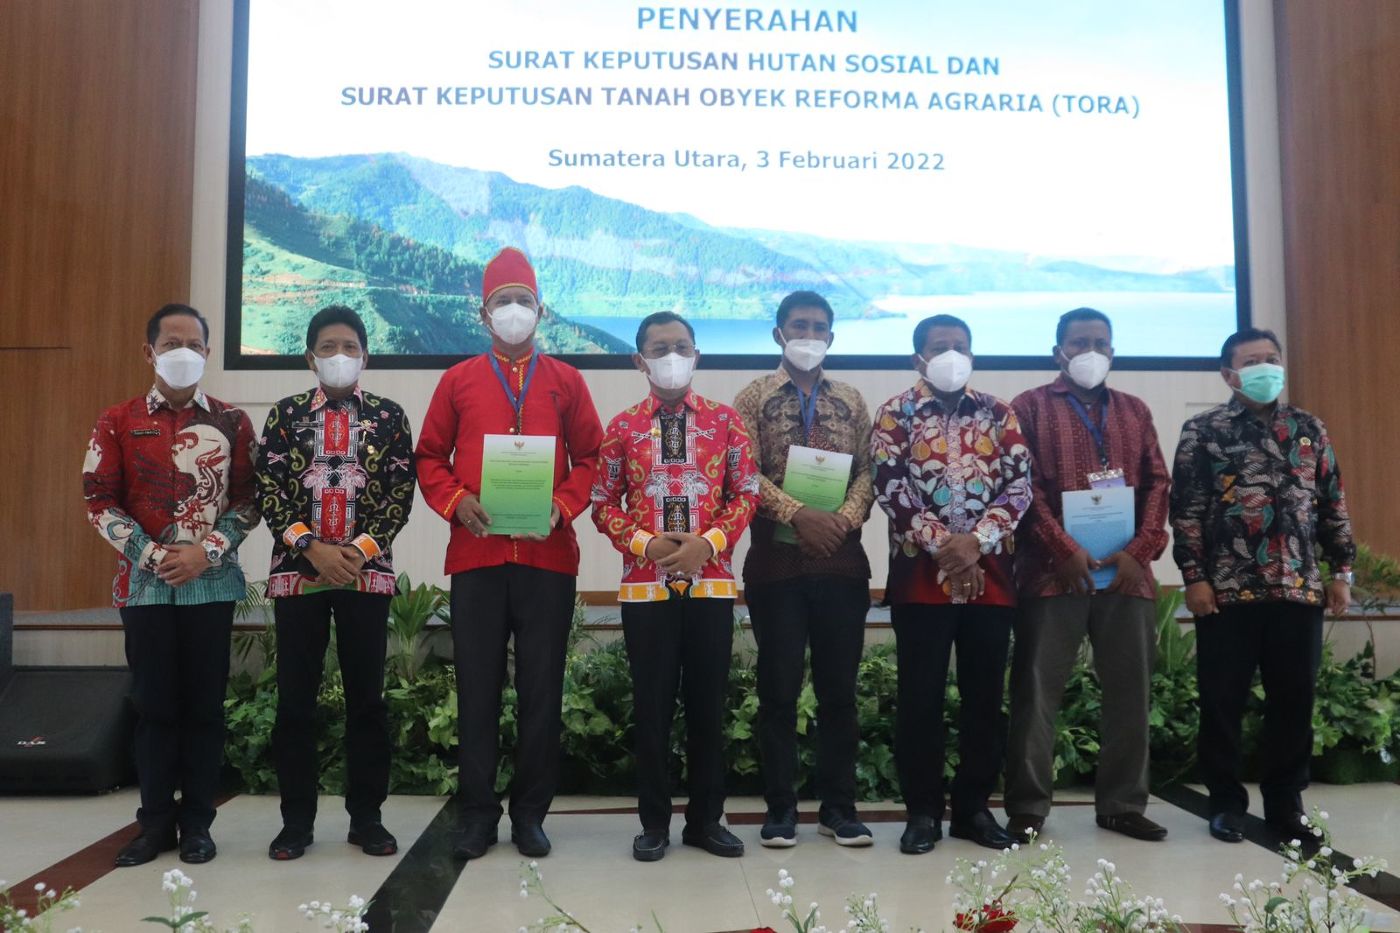 Wagub Hadiri Penyerahan SK Hutan Sosial dan Tora se-Indonesia Oleh Presiden Jokowi Secara Virtual